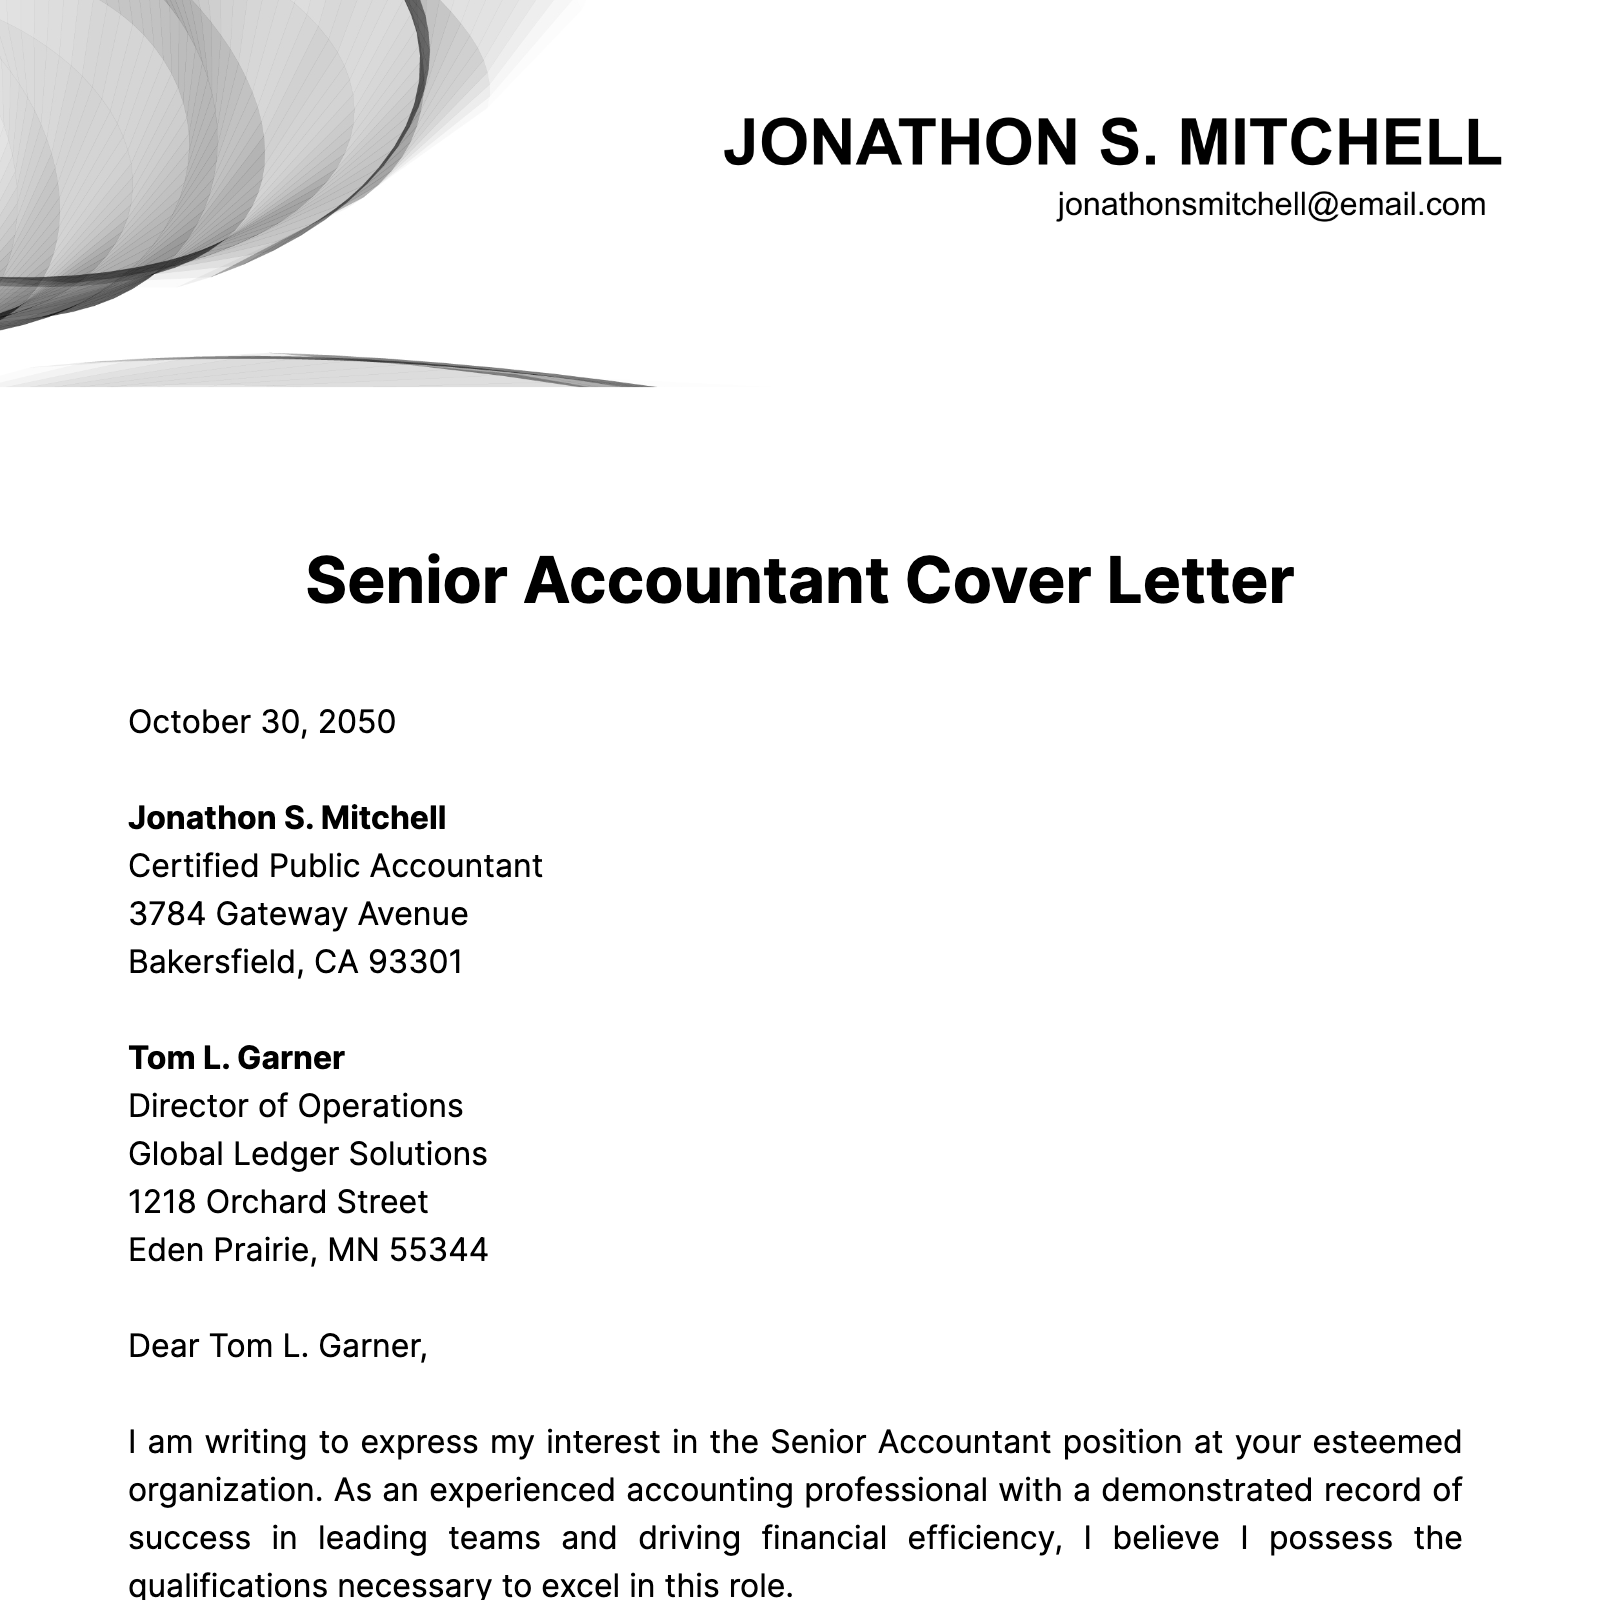 Senior Accountant Cover Letter  Template